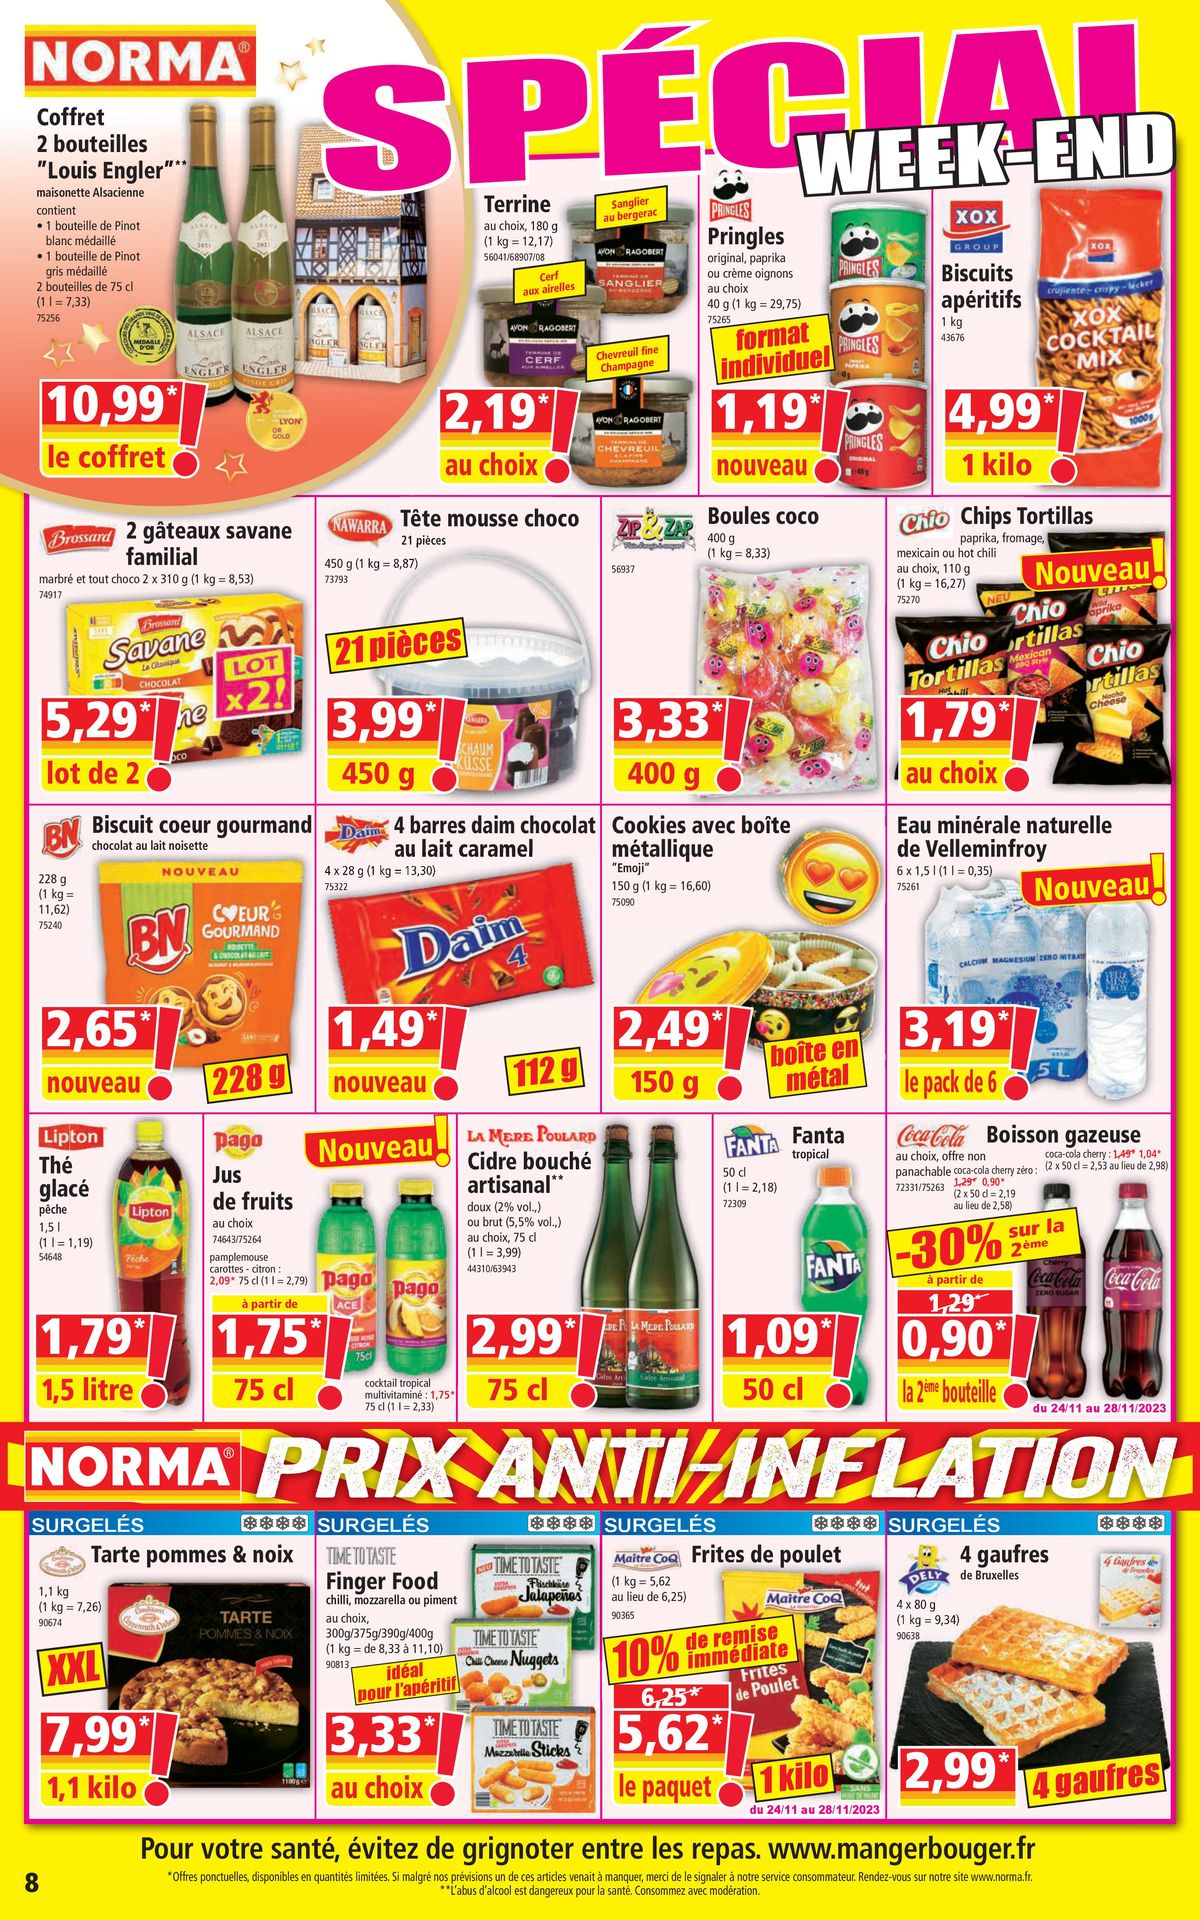 Catalogue Prix anti-inflation, page 00008